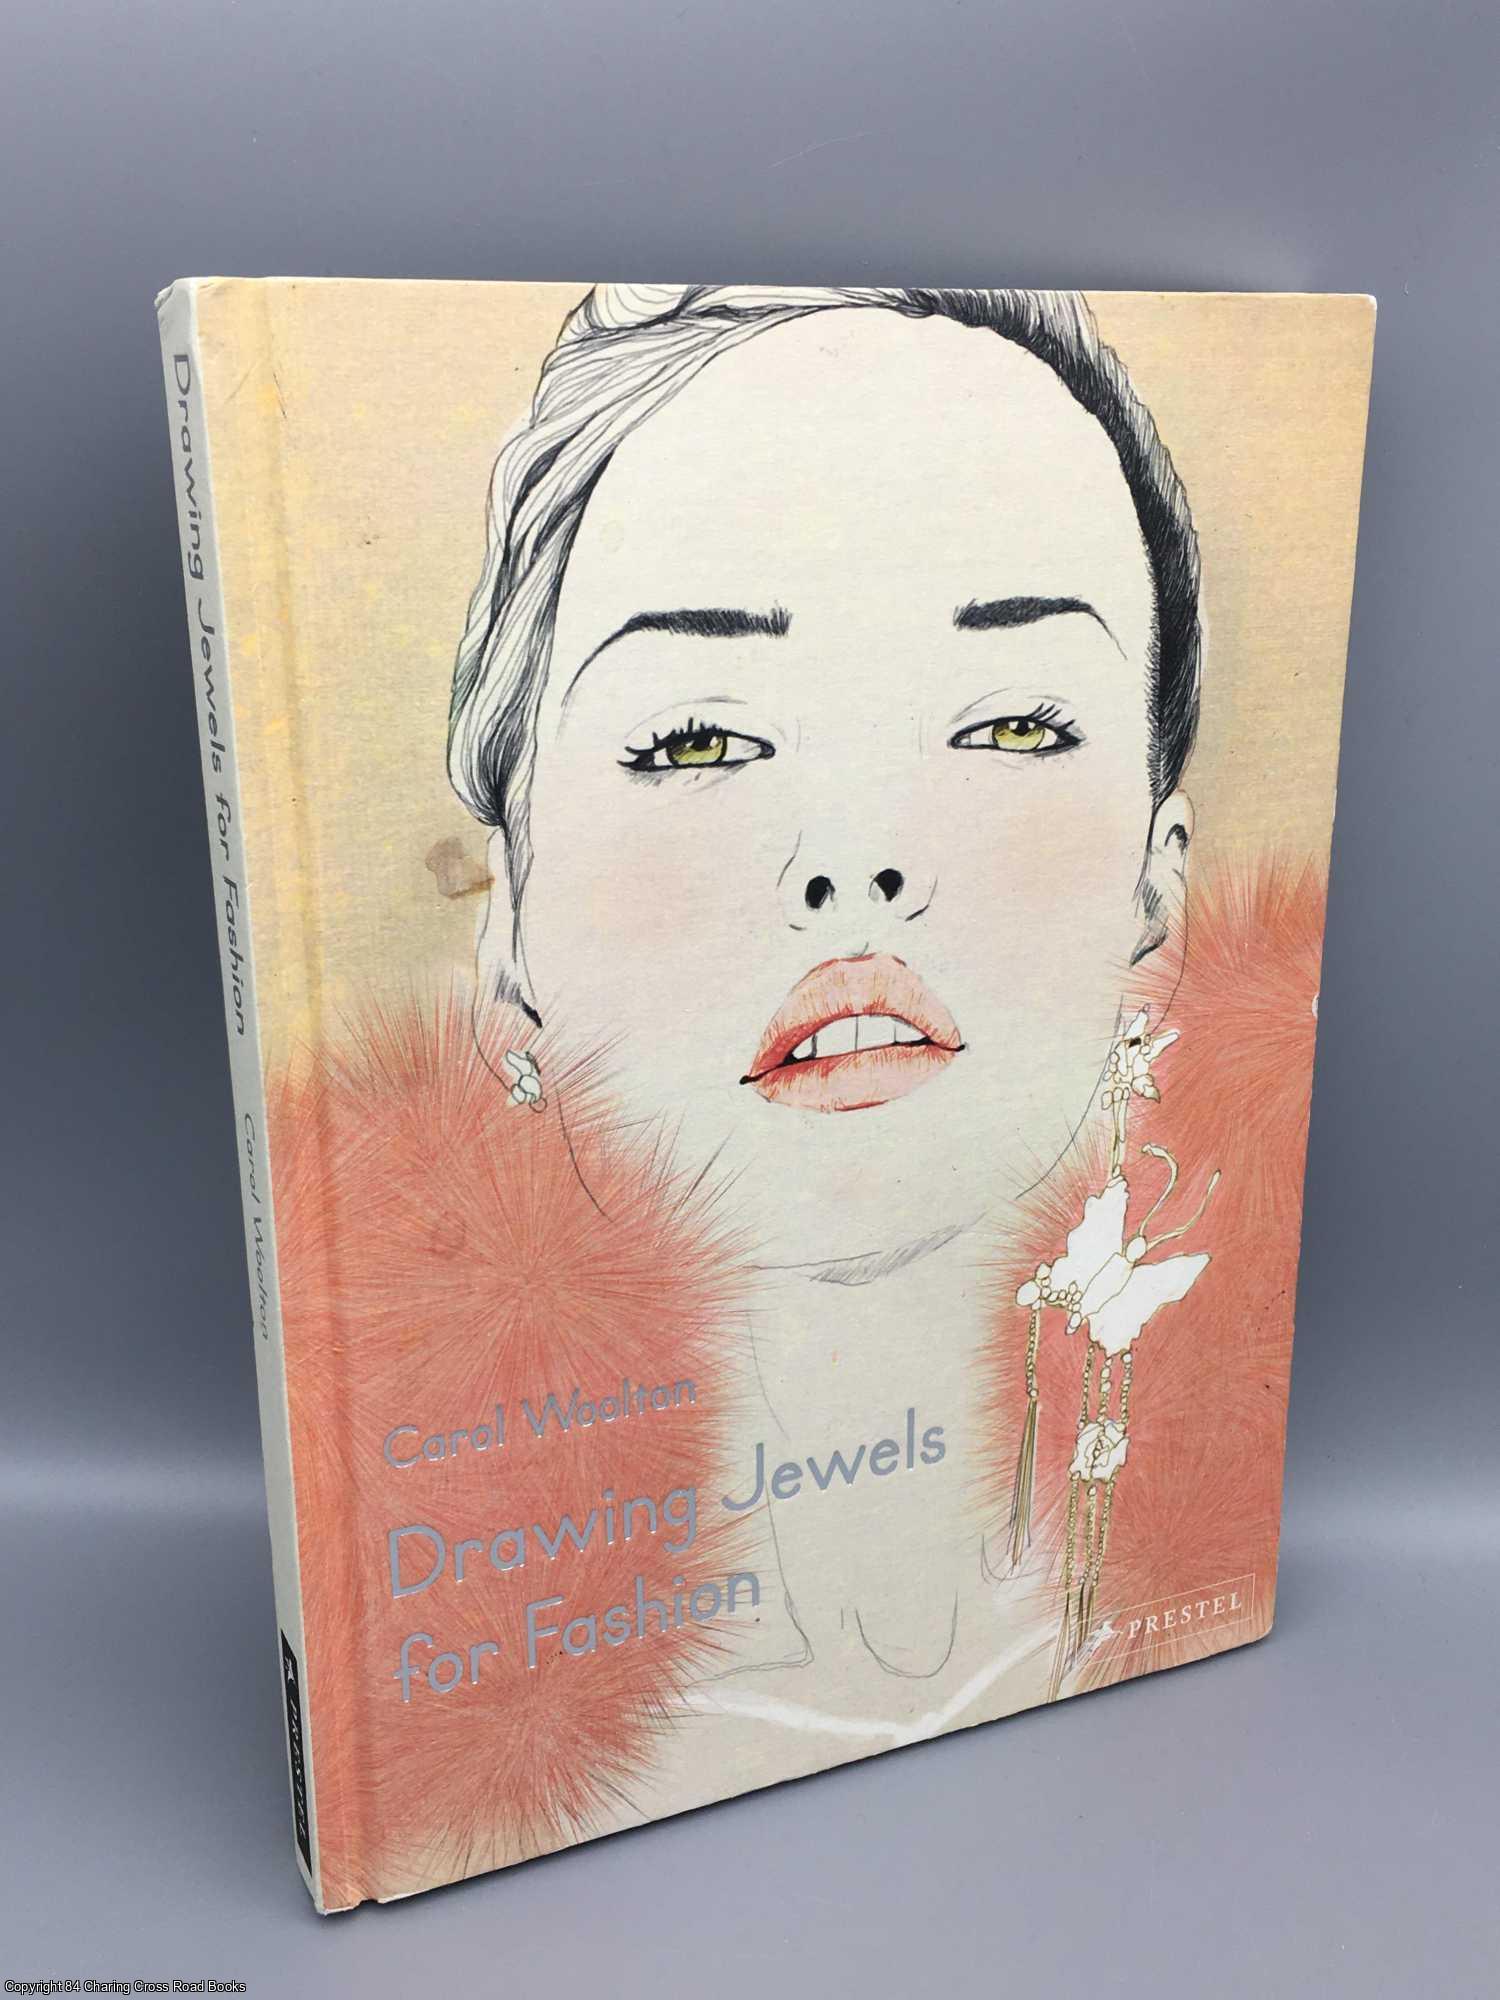 Woolton, Carol - Drawing Jewels For Fashion